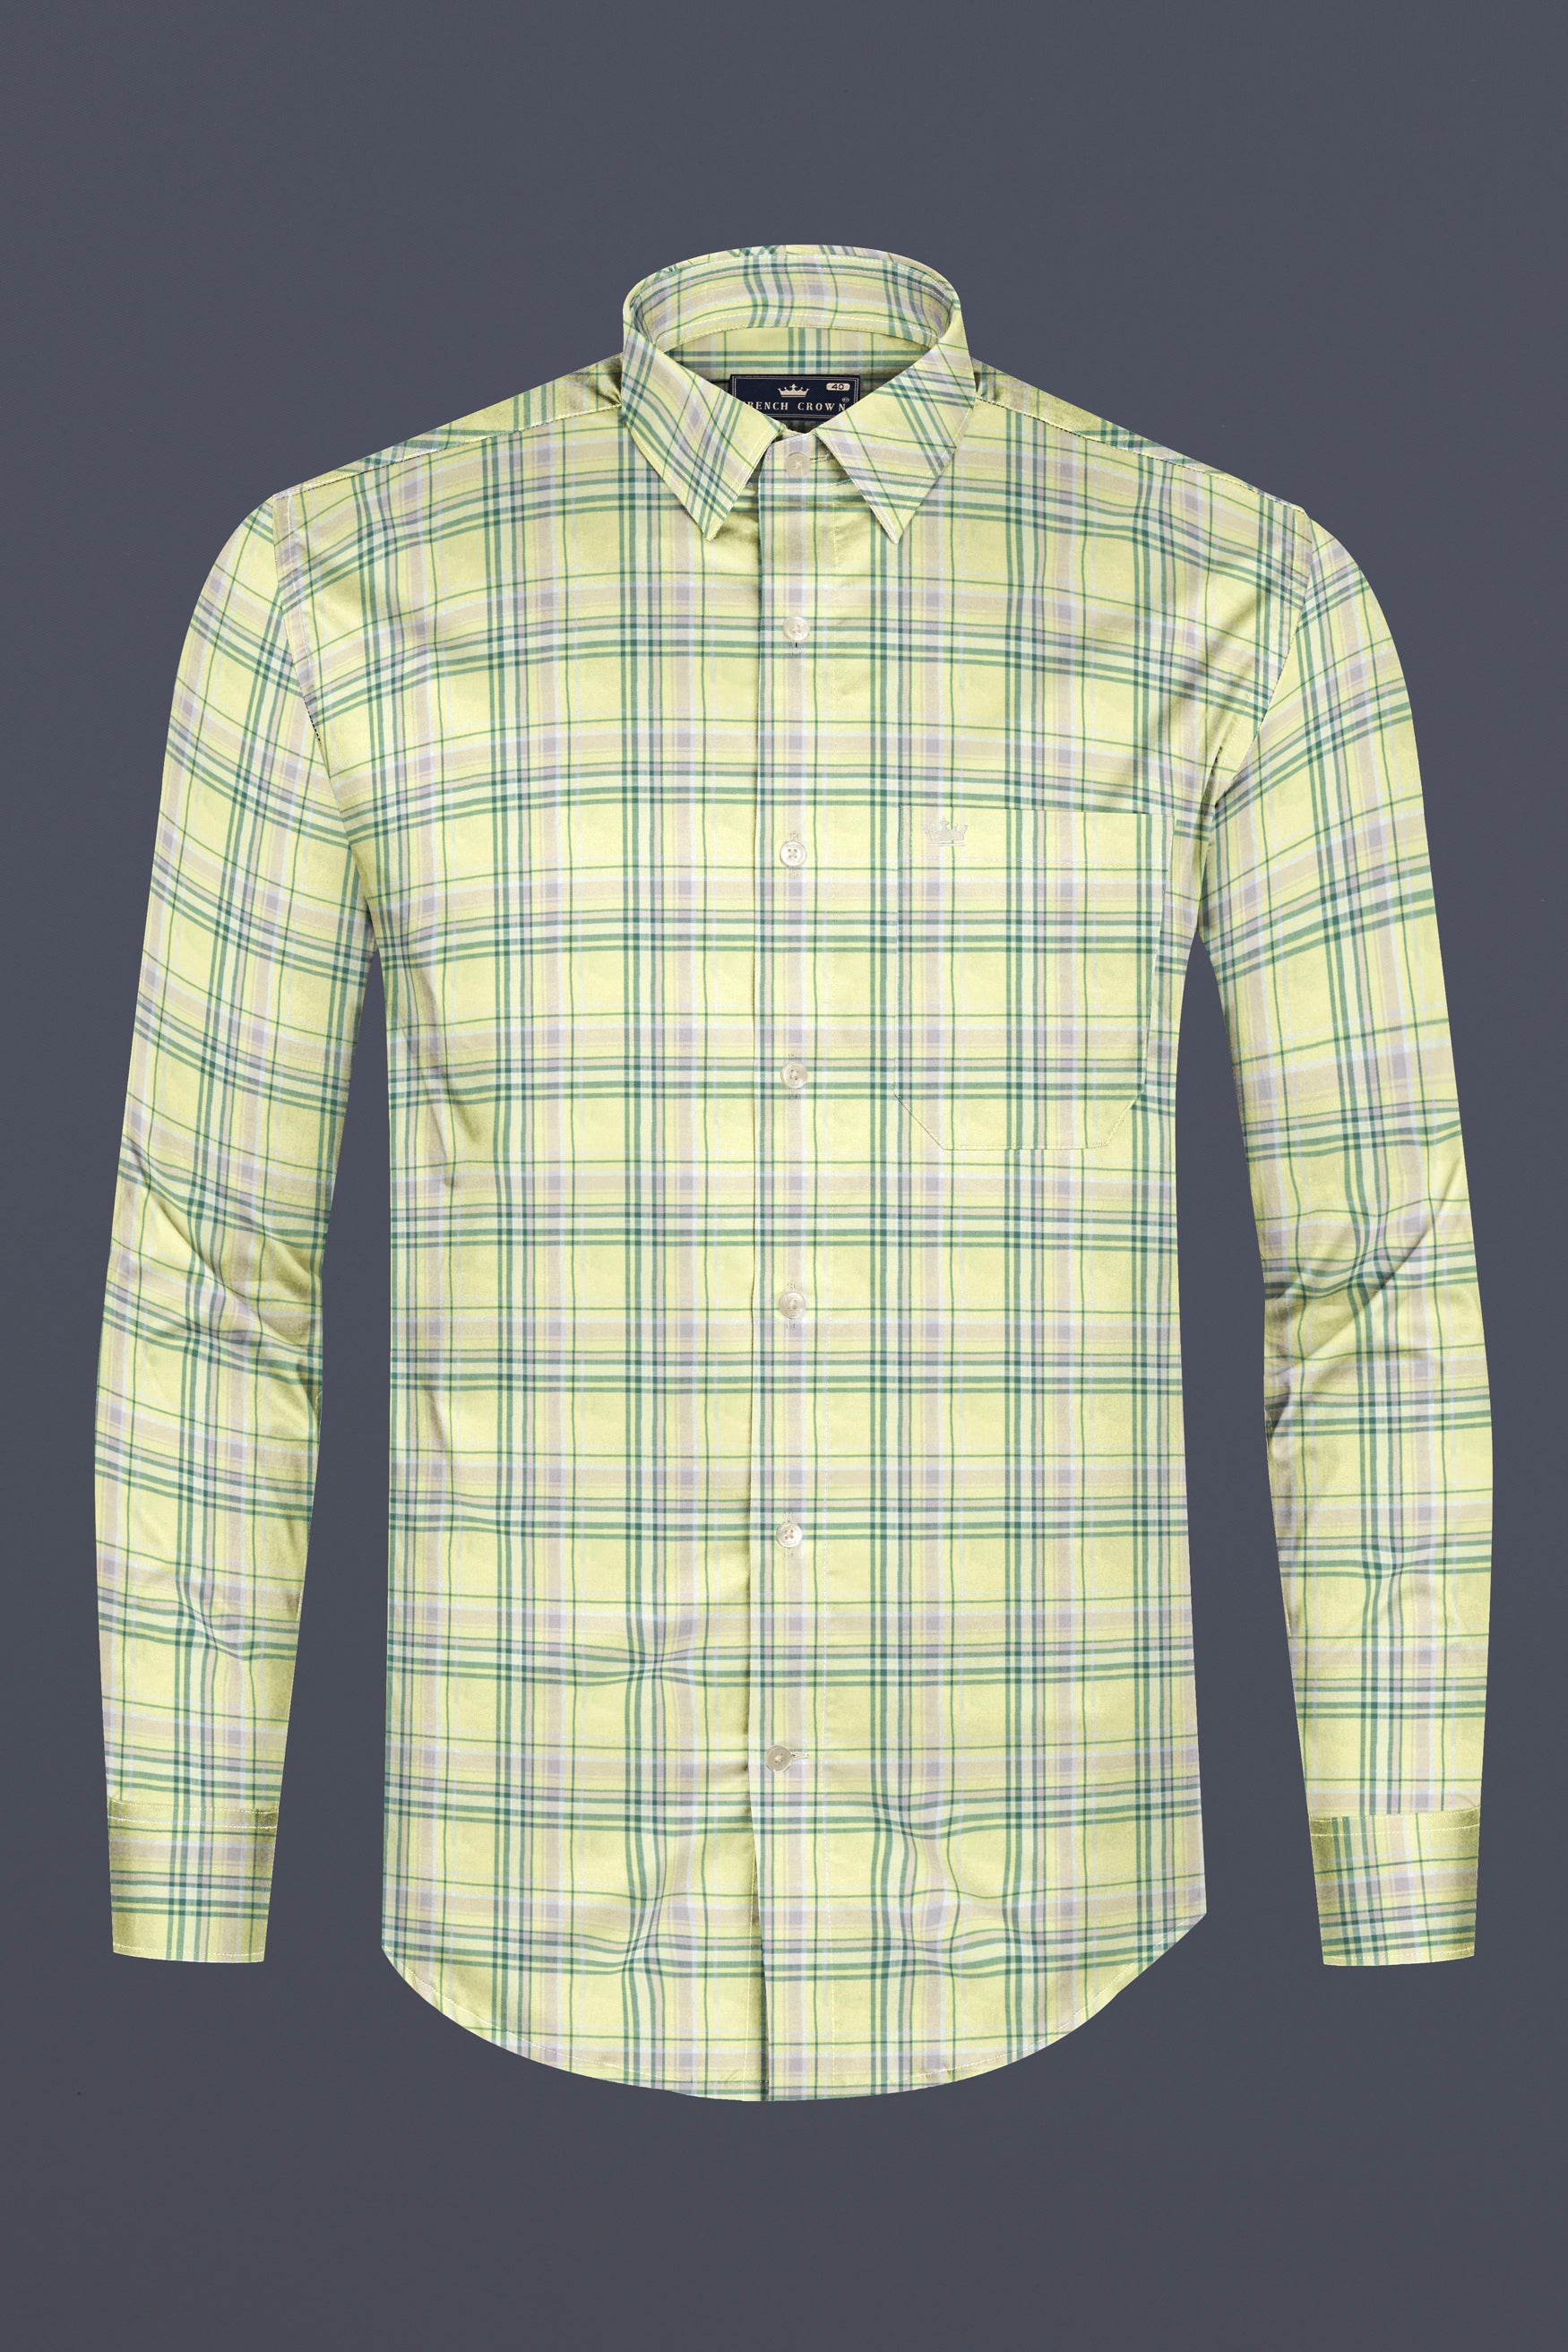 Primrose Yellow with Viridian Green plaid Twill Cotton Shirt